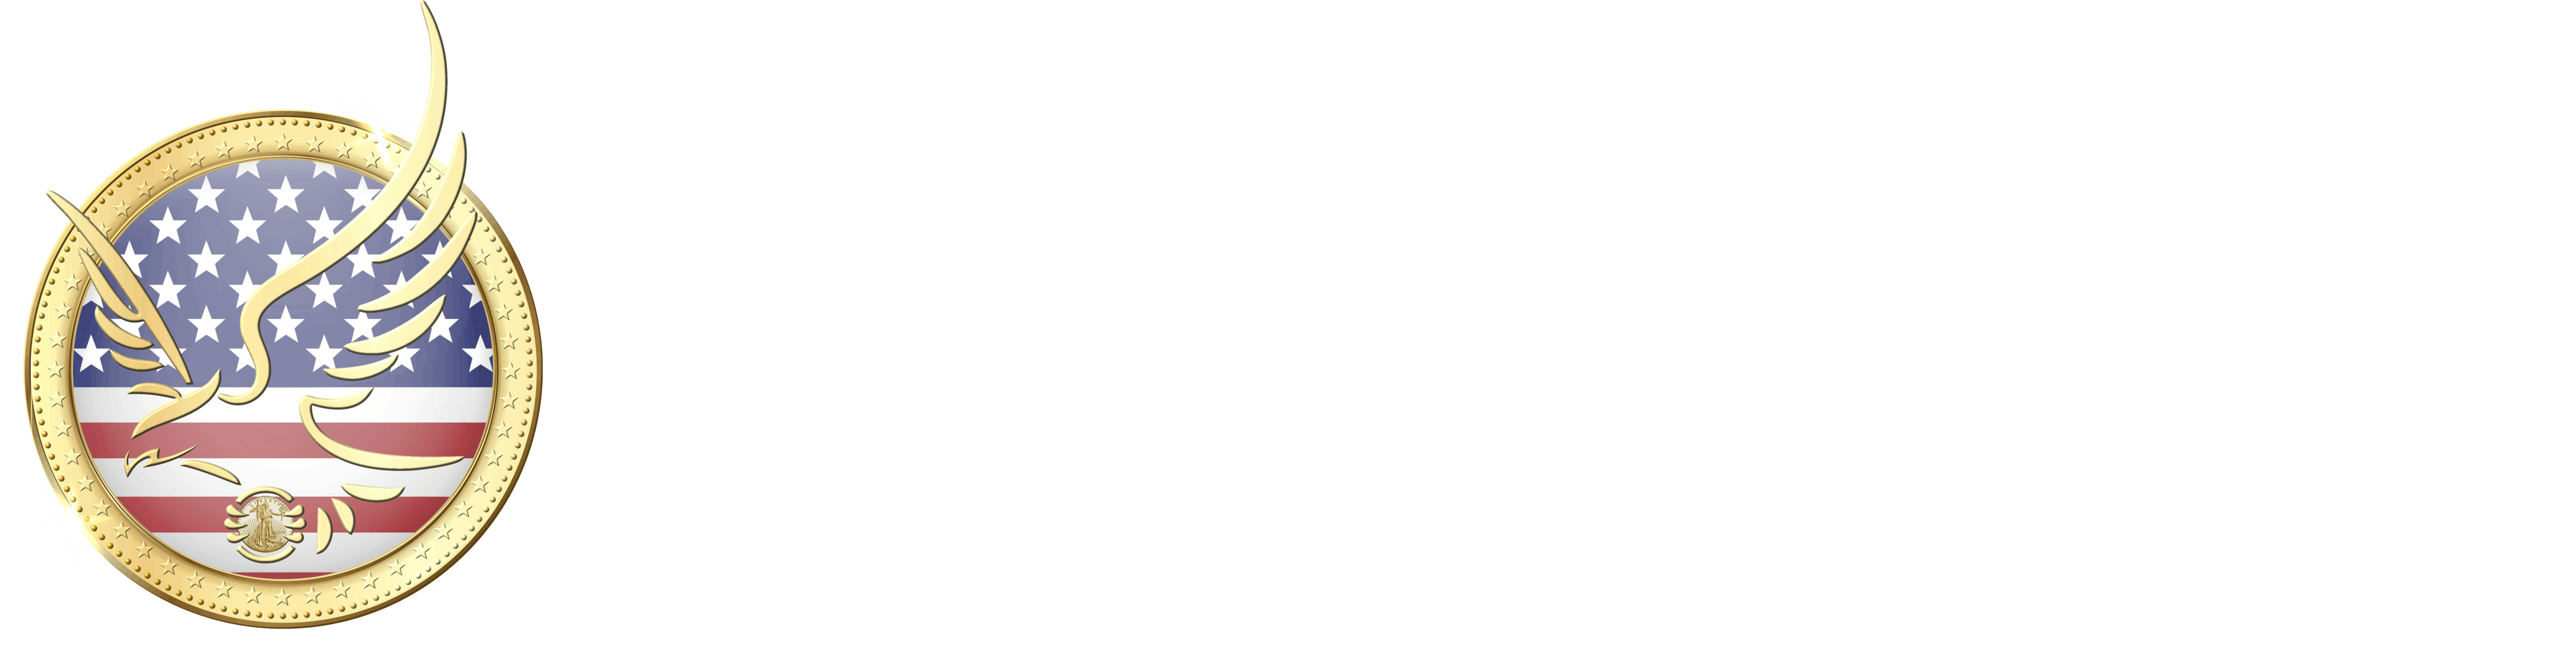 Reagan Gold Group